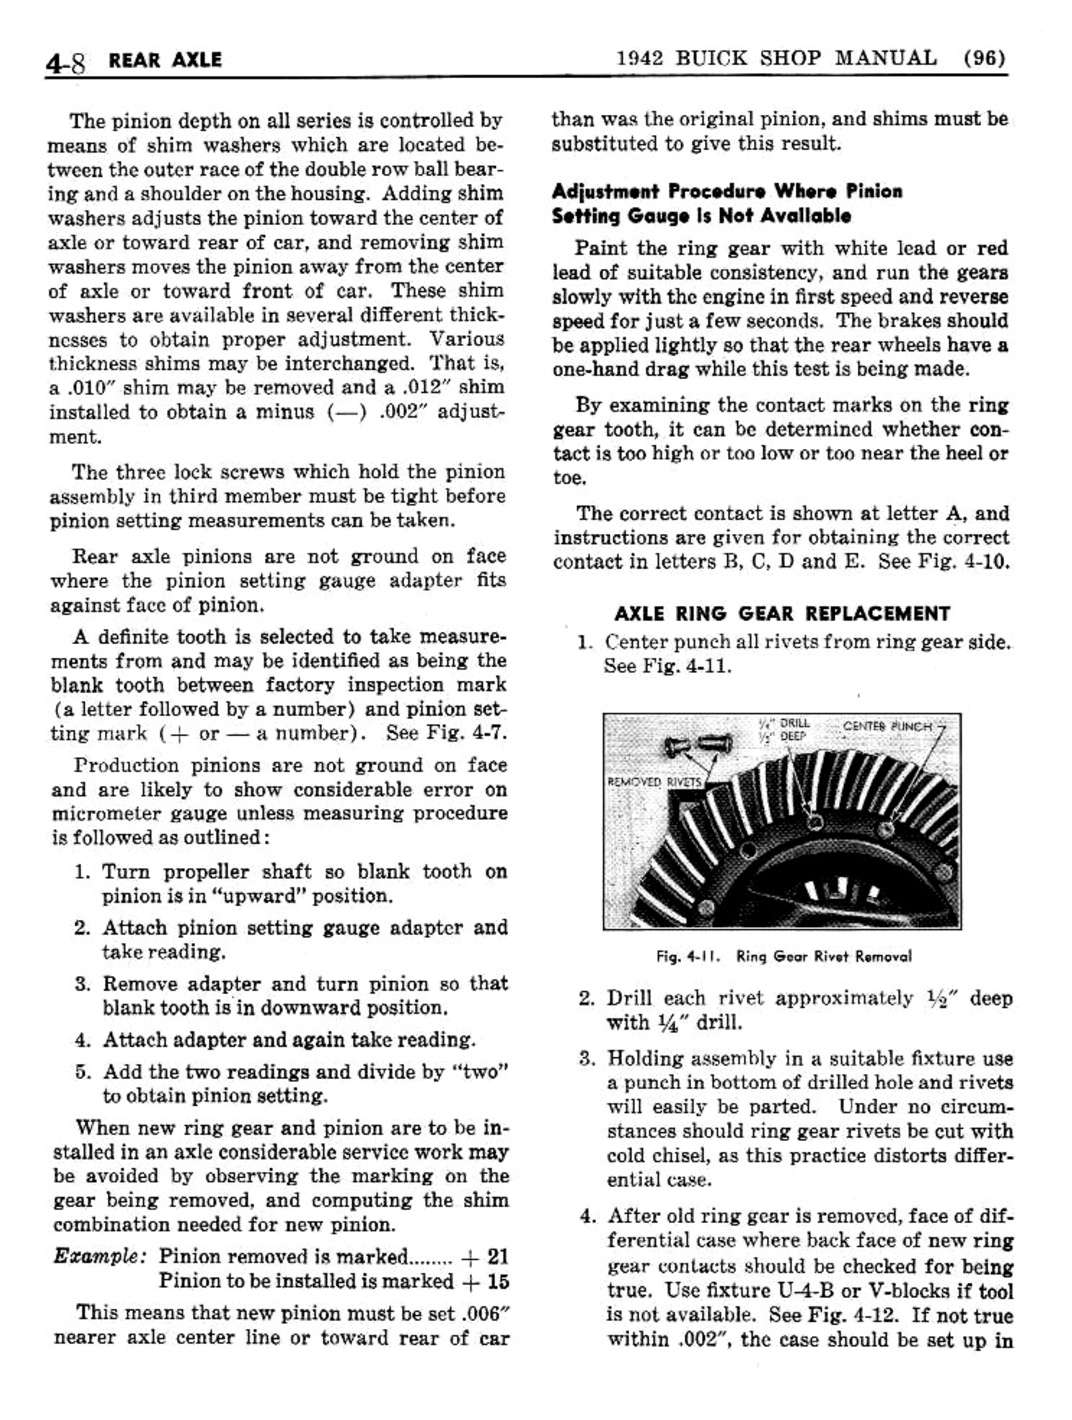 n_05 1942 Buick Shop Manual - Rear Axle-008-008.jpg